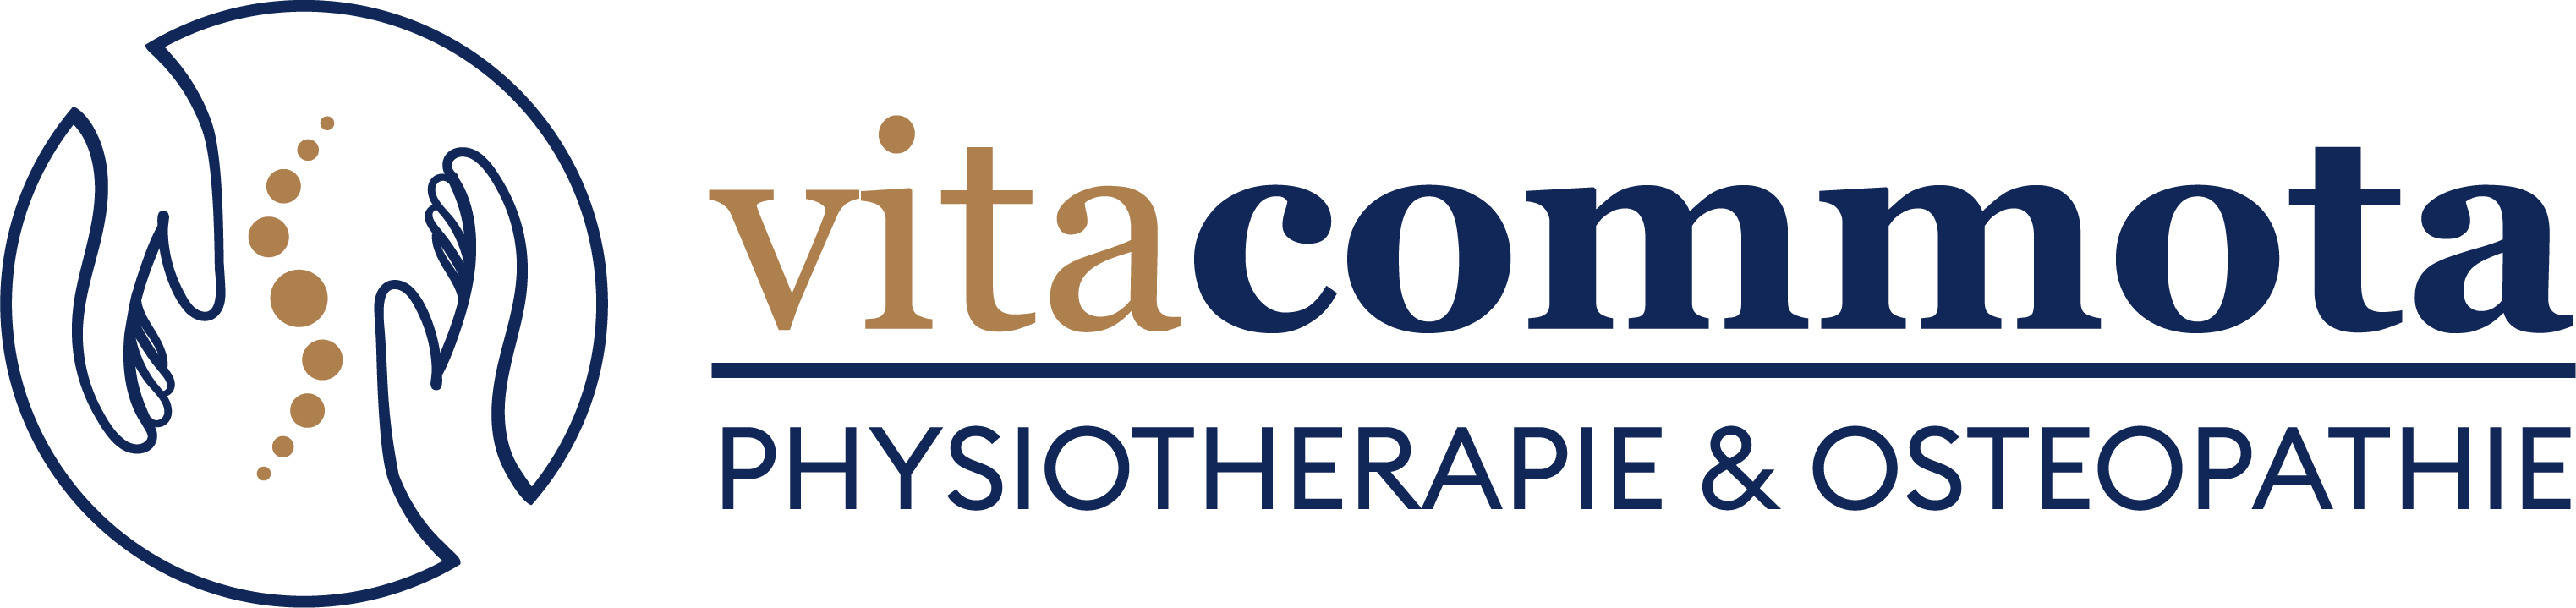 Vita Commota – Physiotherapie und Osteopathie 